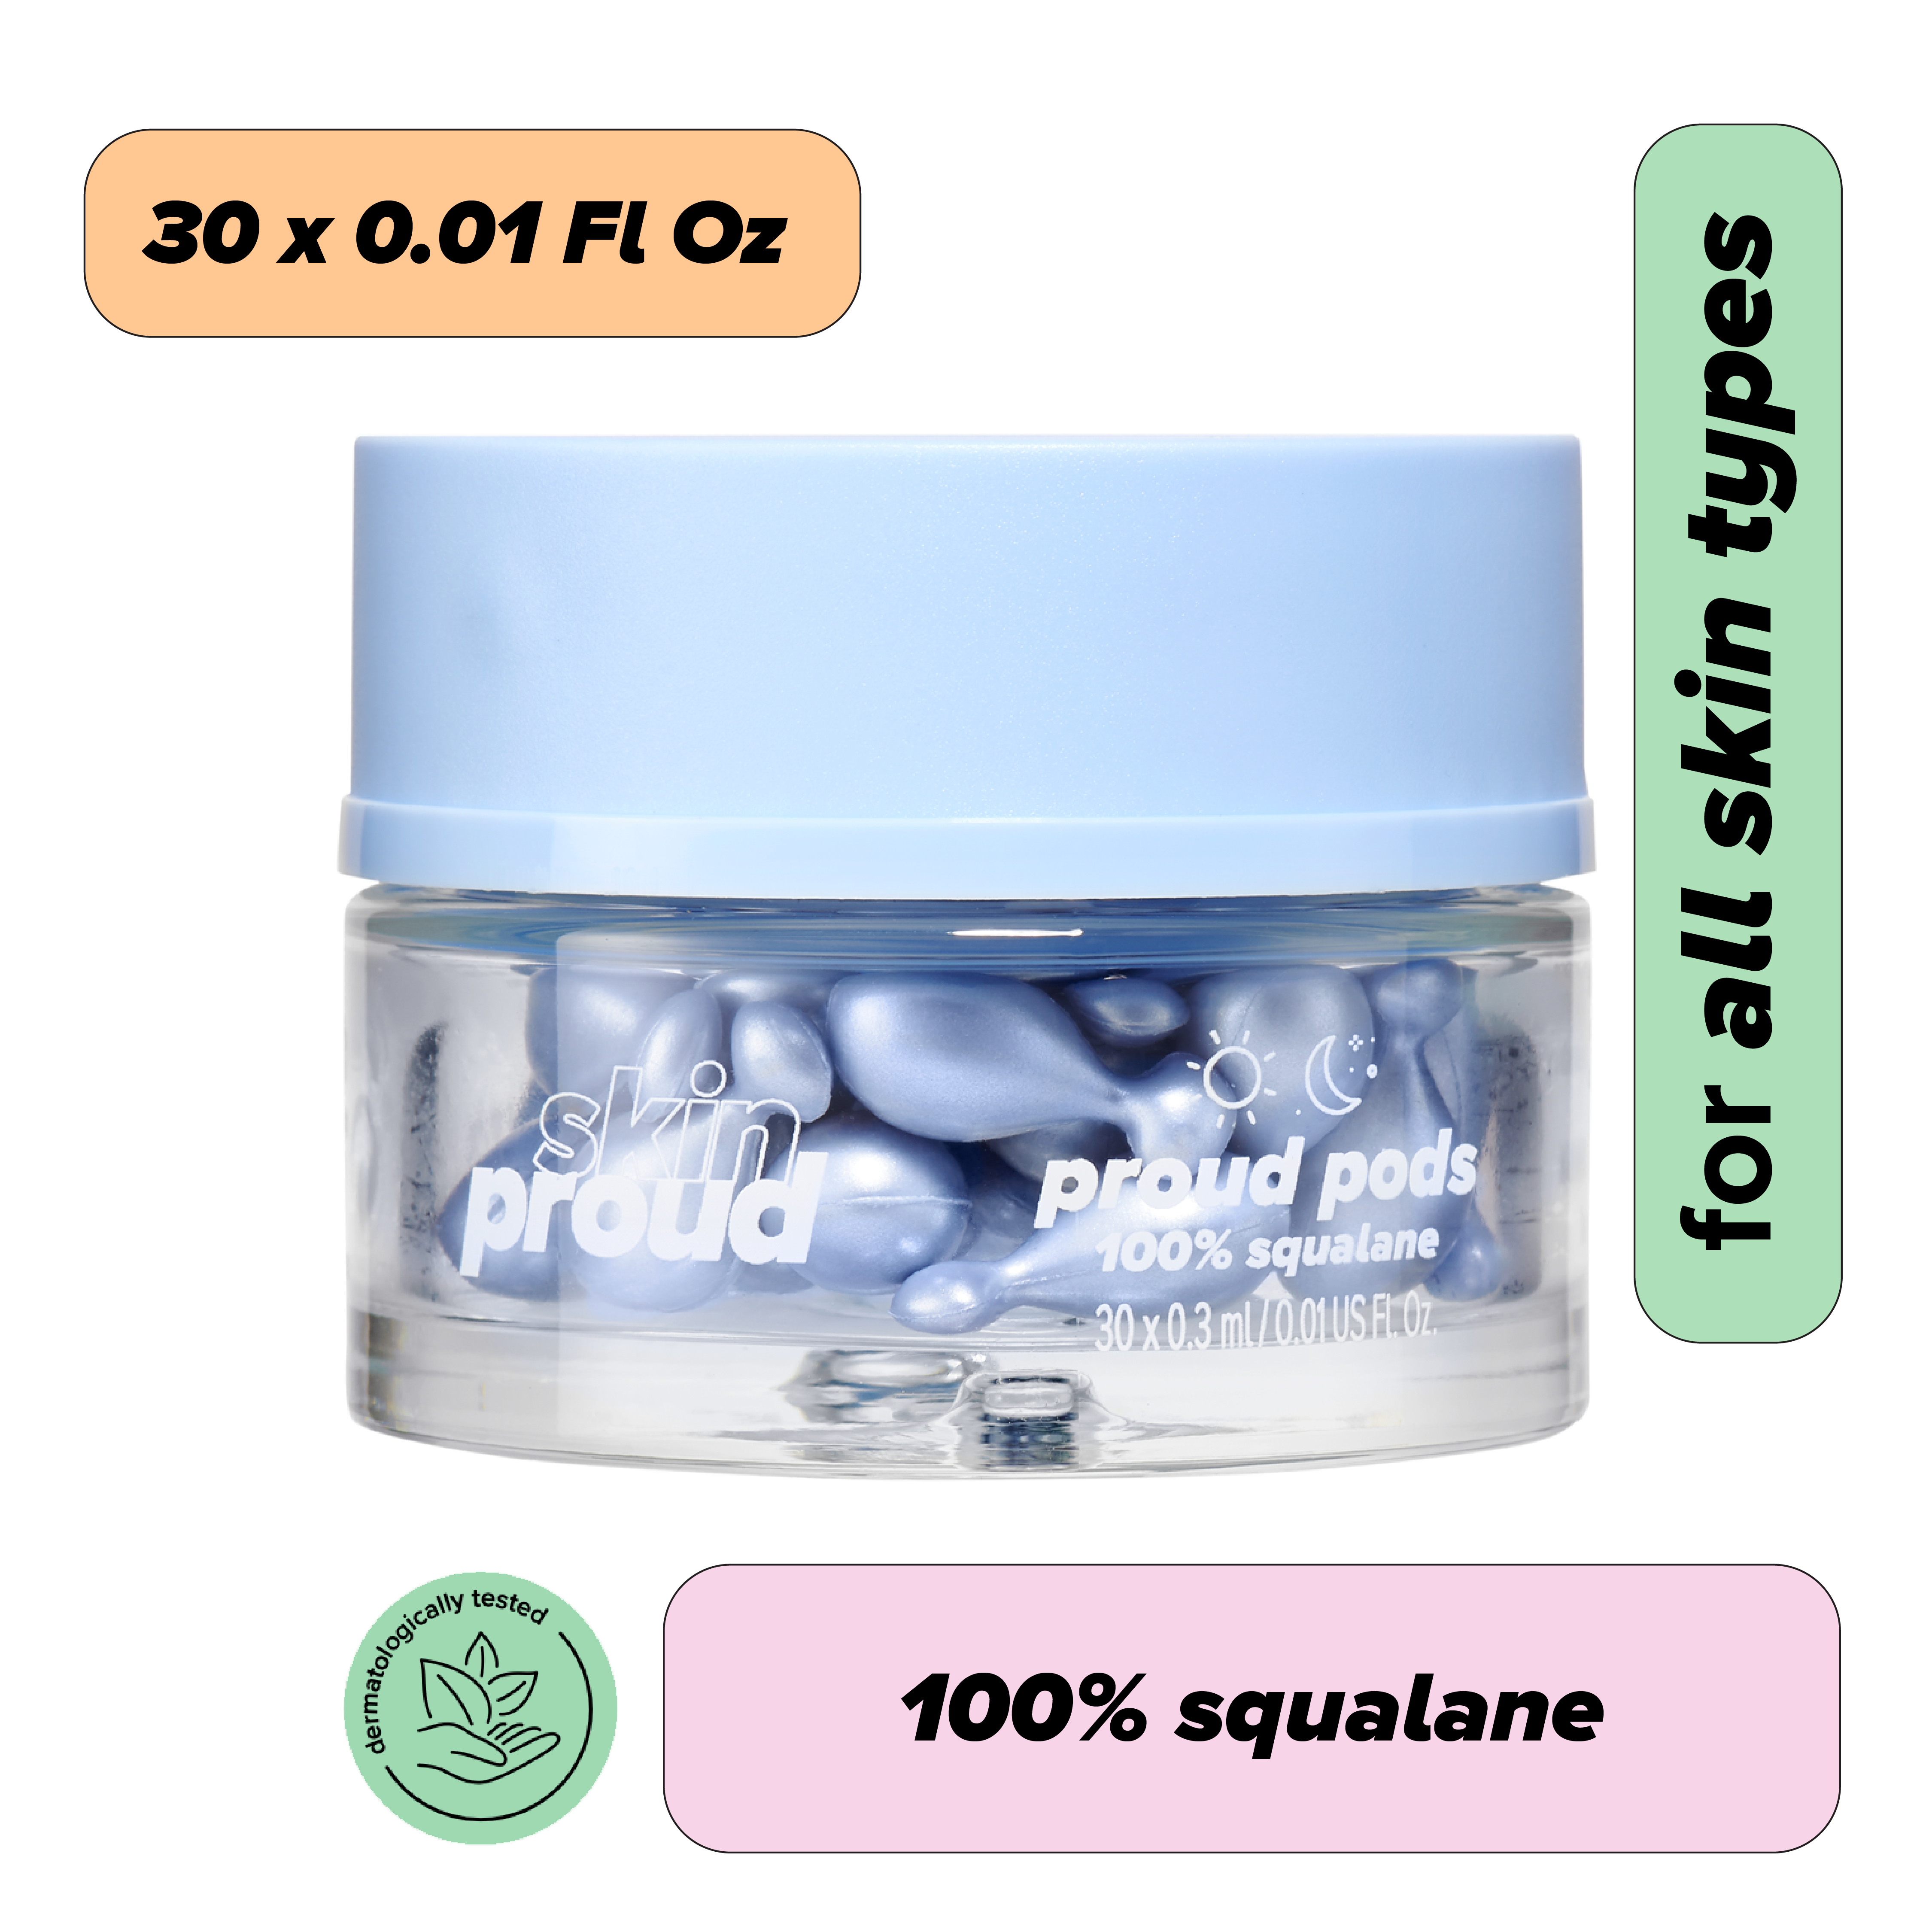 Skin Proud, Proud Pods, Moisturizing 100% Squalane, Biodegradable Facial Capsules, 30 Pk - image 1 of 8